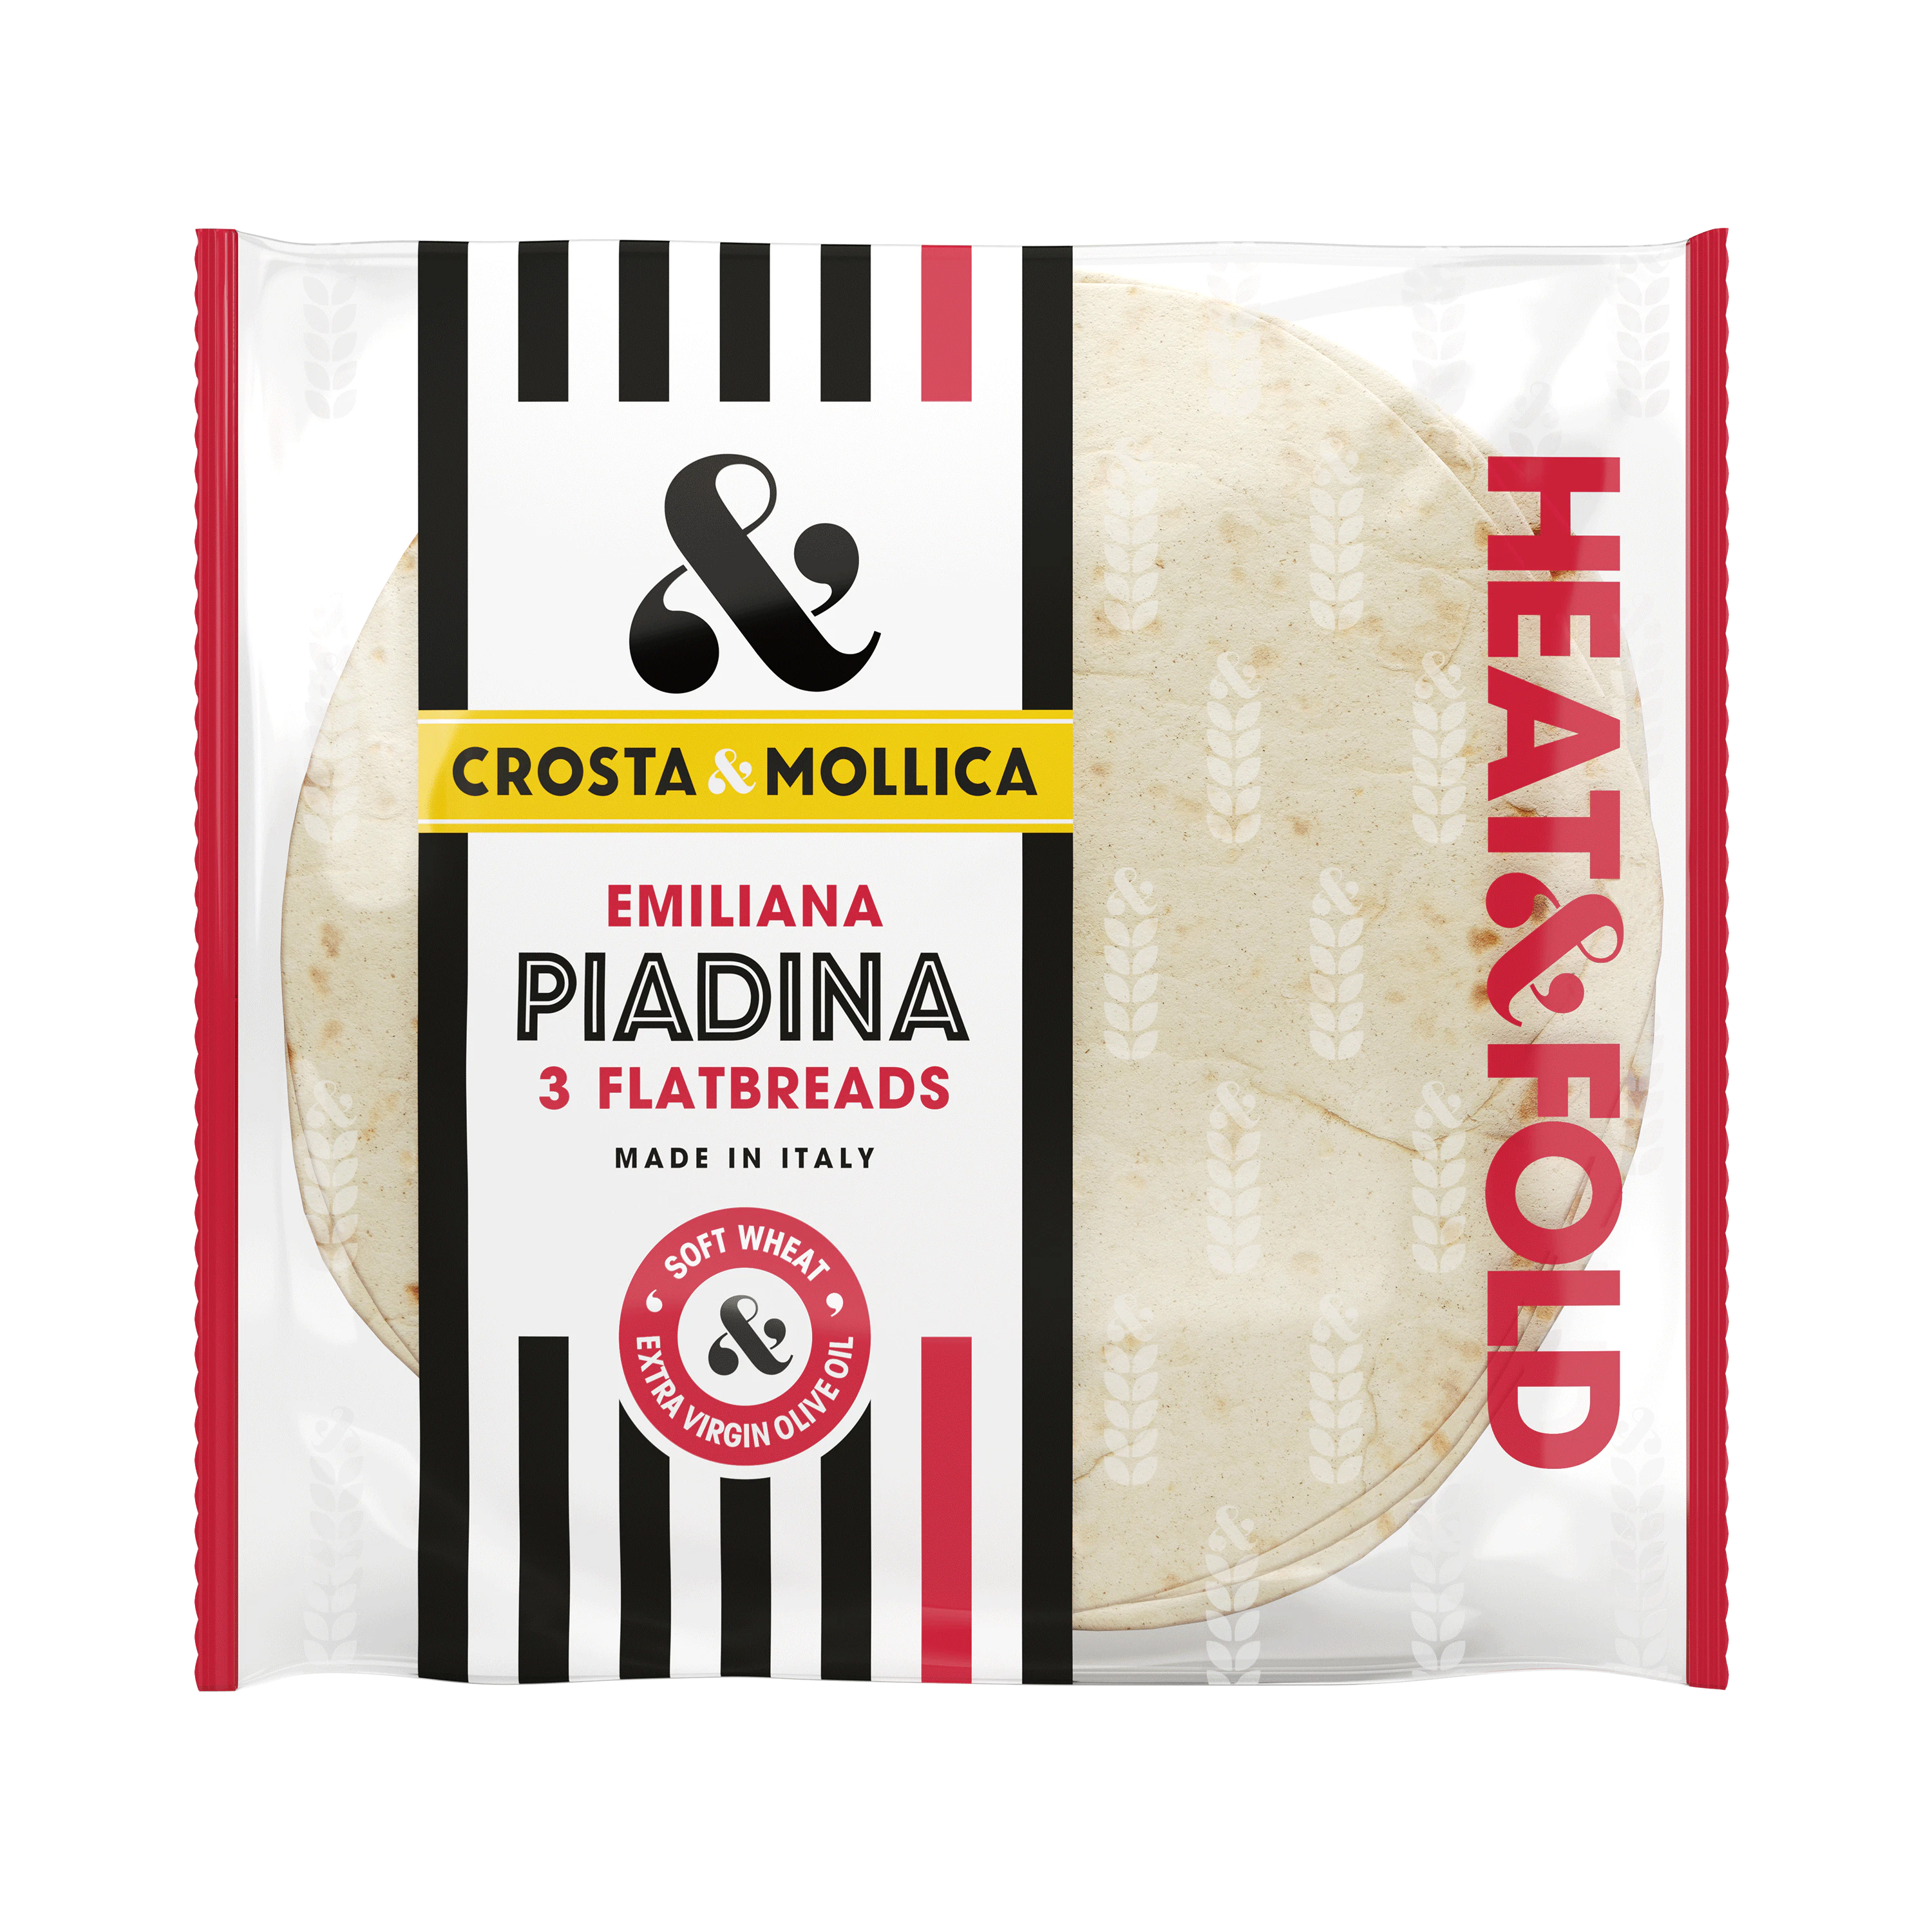 Emiliana Piadina flatbread packaging. 